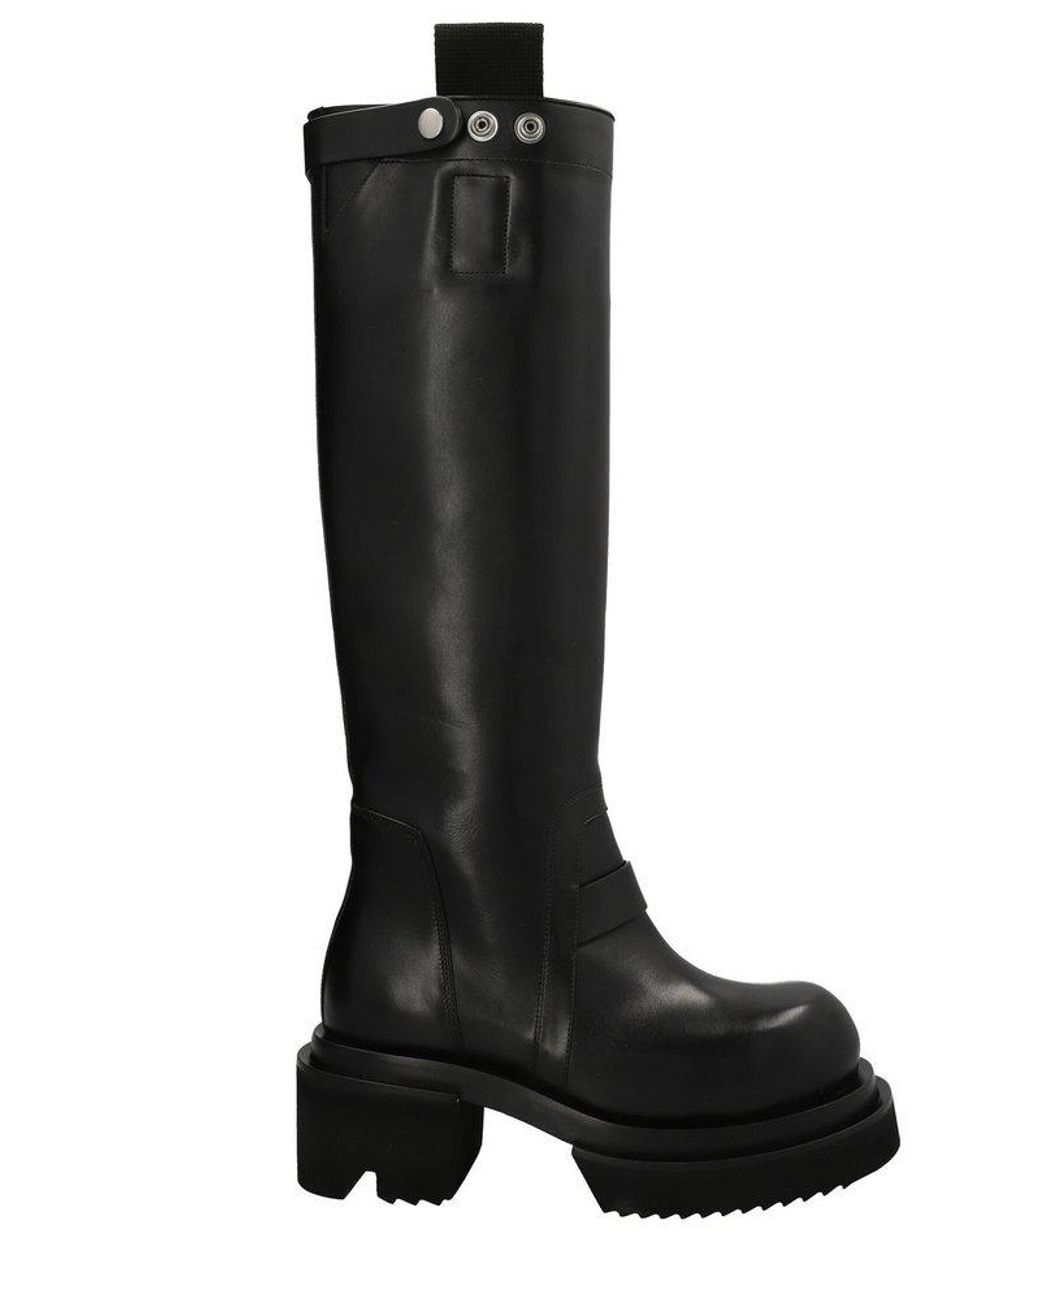 Rick Owens Bogun Knee-high Leather Boots in Black | Lyst